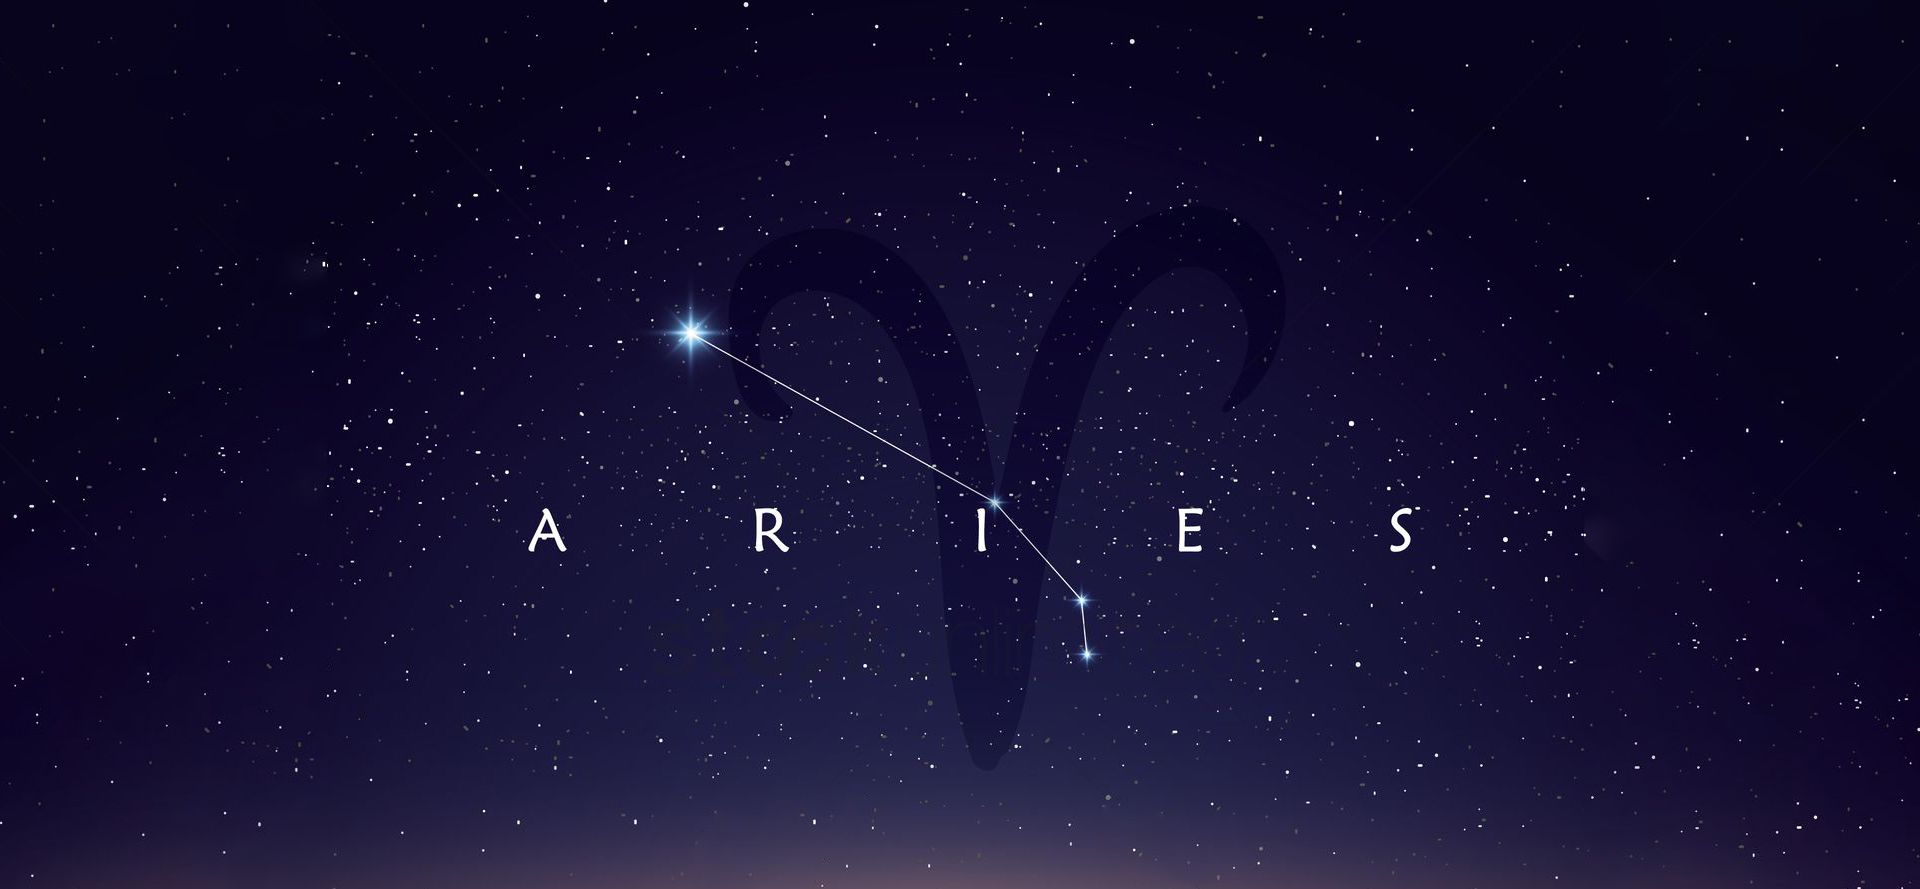 Aries constellation.